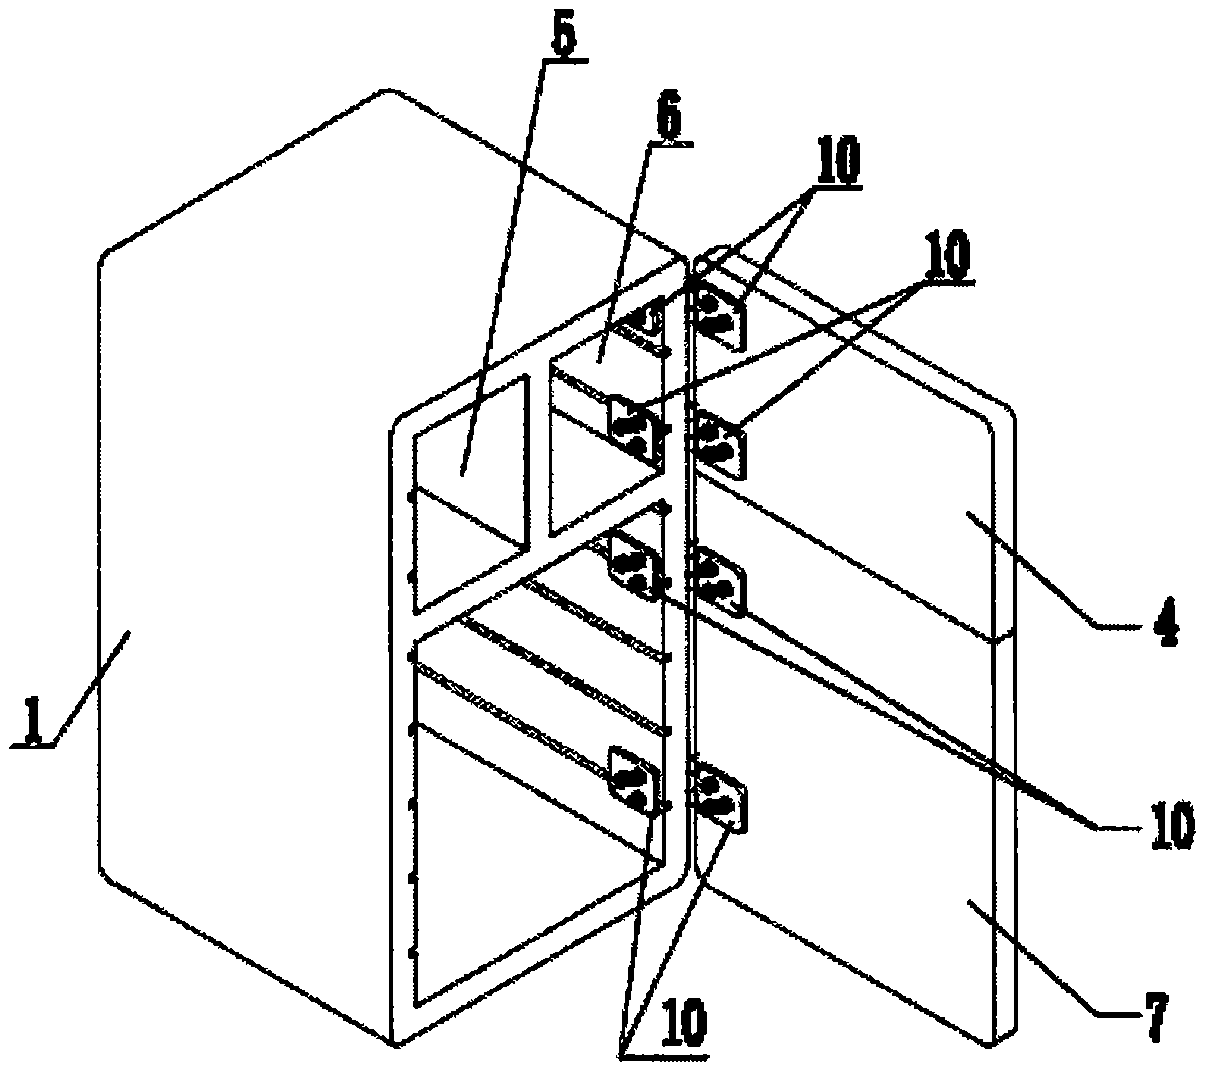 An inner circulation heating distribution box